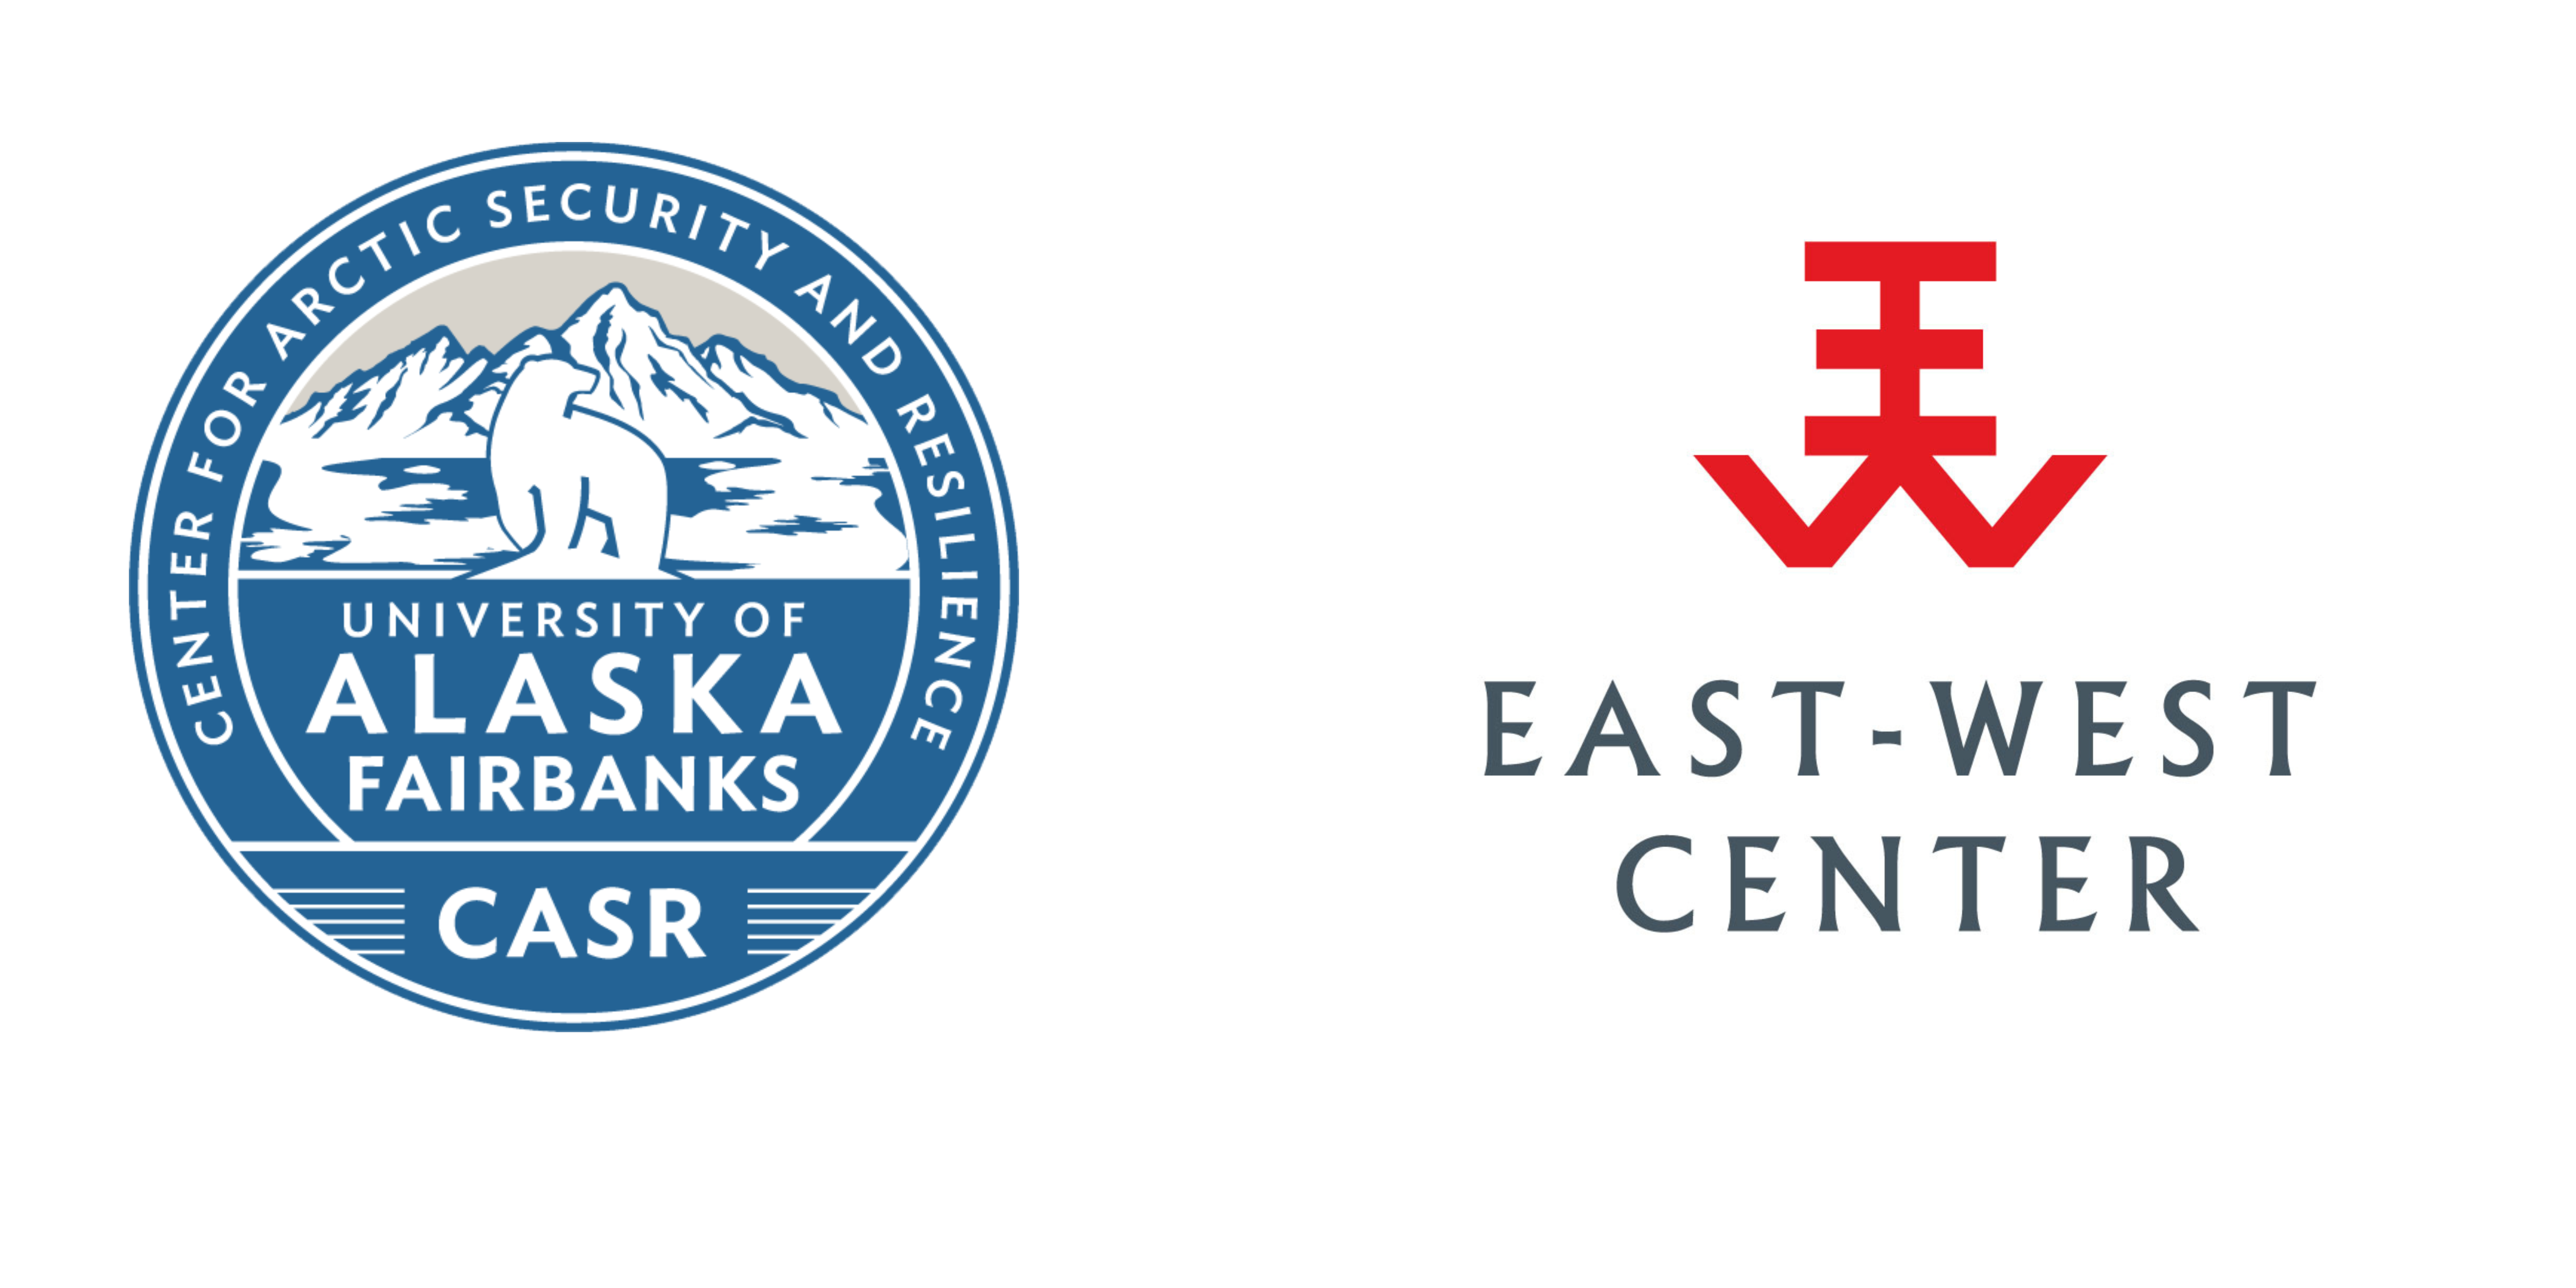 Logos for University of Alaska Fairbanks and East-West Center